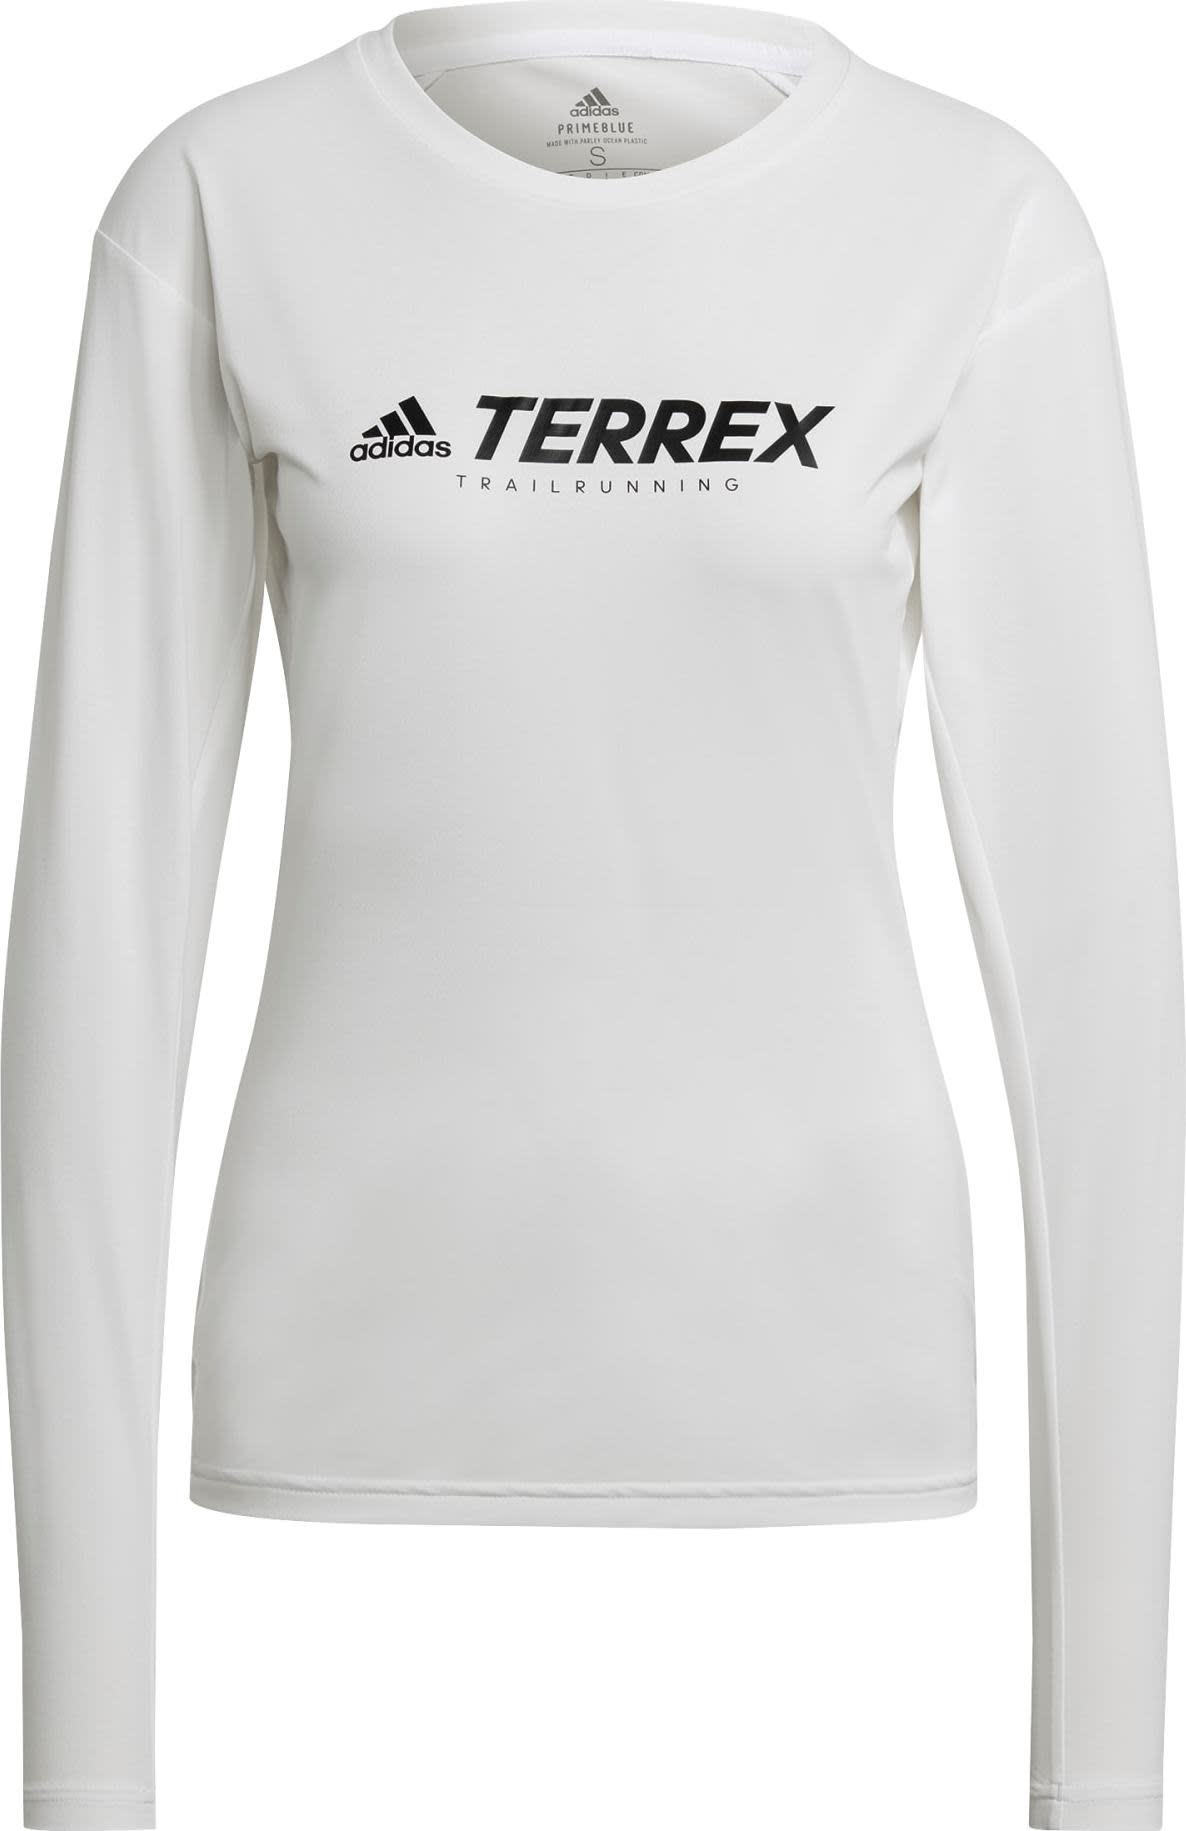 Adidas Women's Terrex Primeblue Trail LS Top WHITE